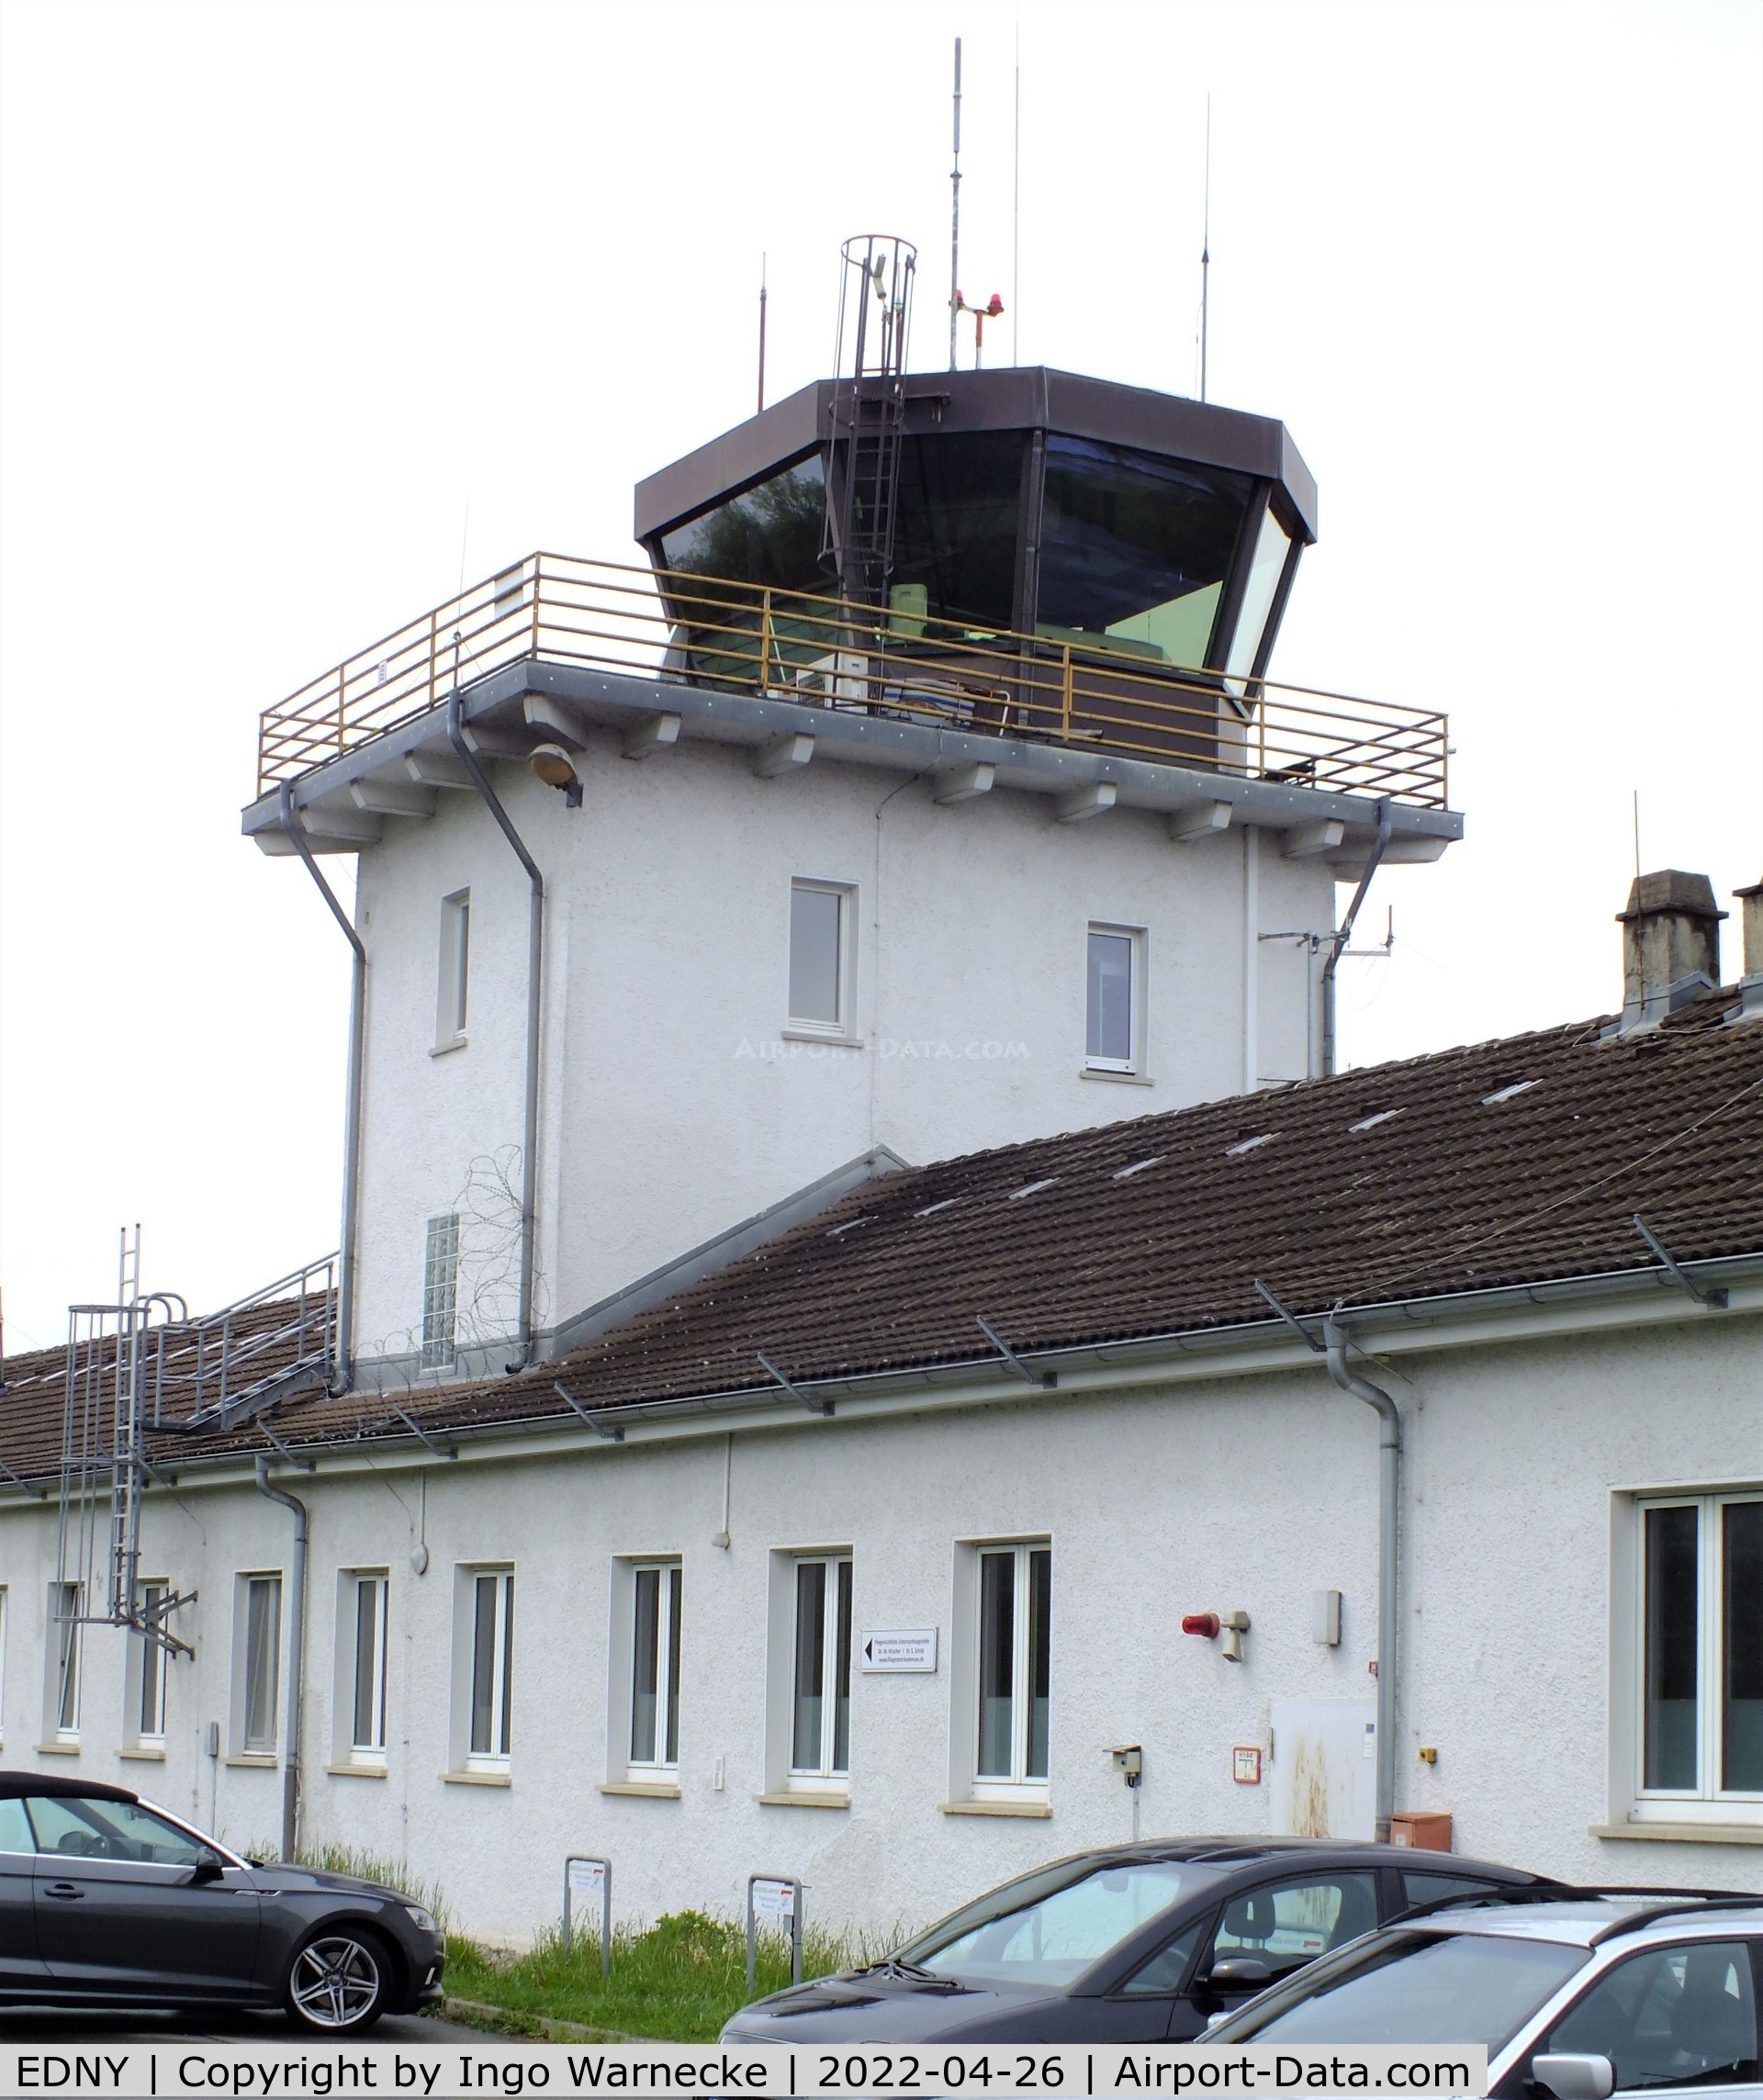 Bodensee Airport, Friedrichshafen Germany (EDNY) - landside view of the tower at Friedrichshafen Bodensee airport